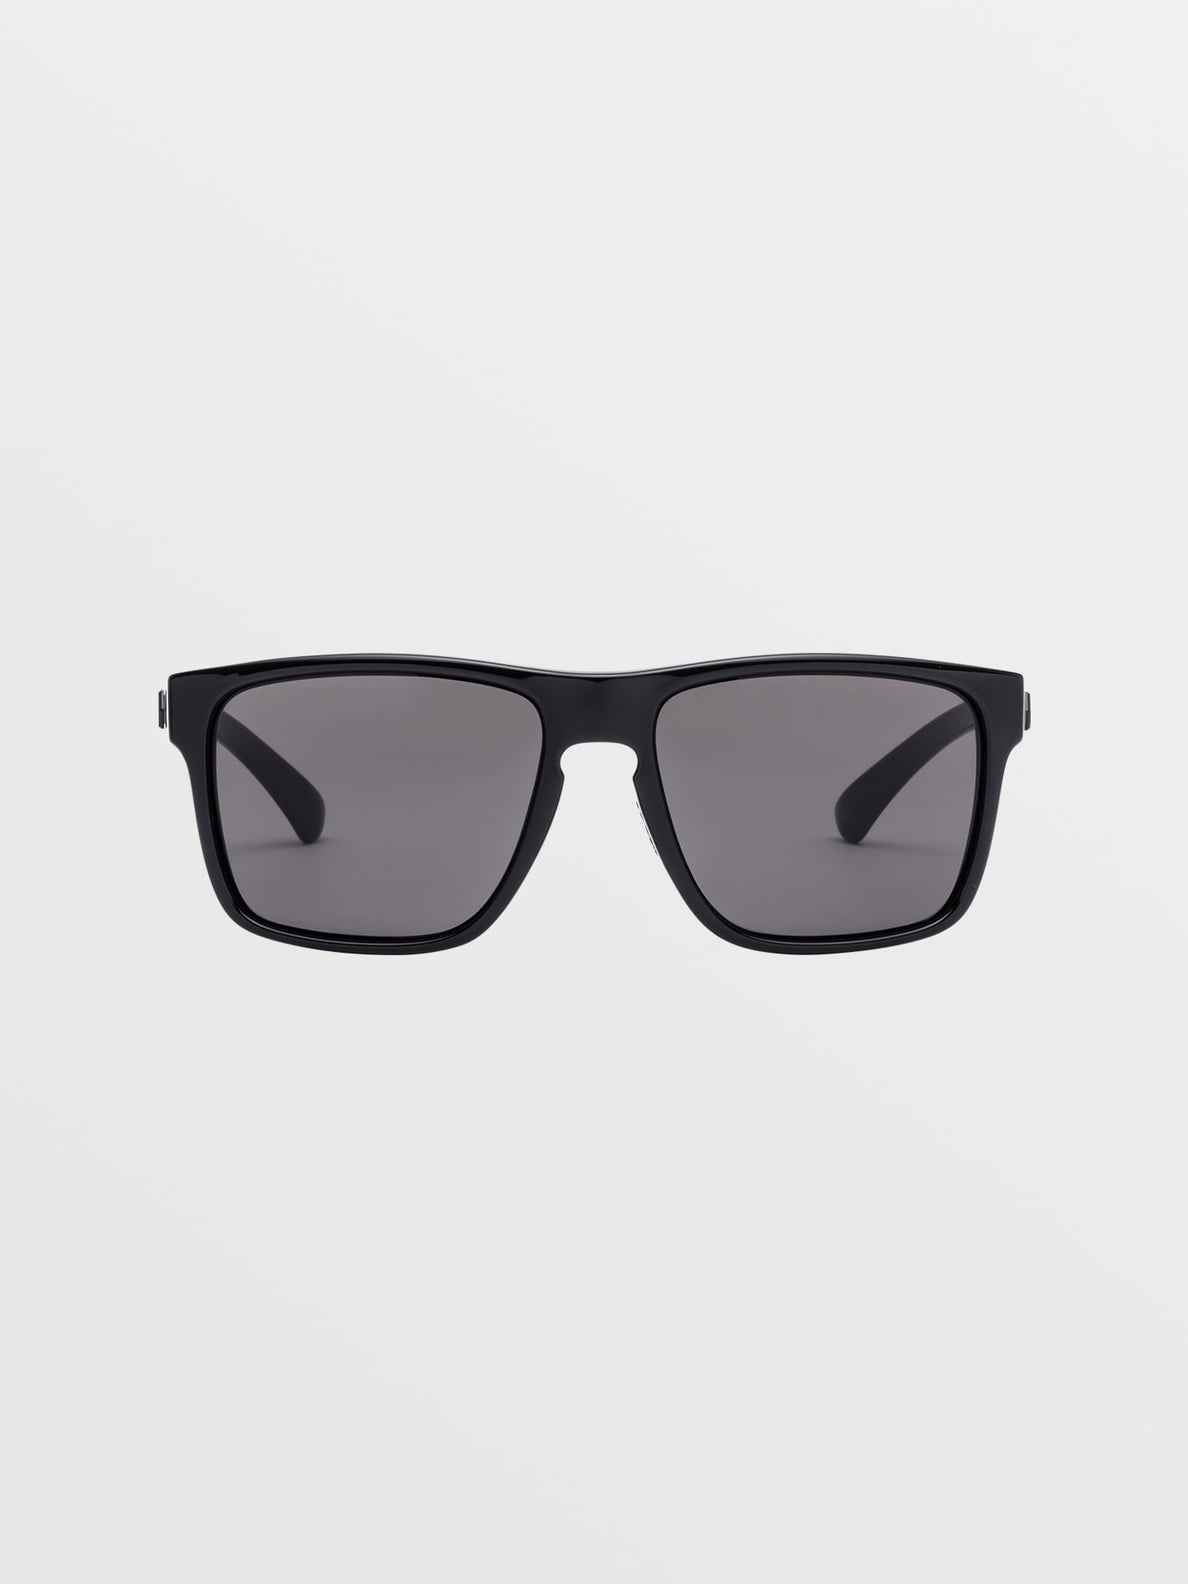 Trick Sunglasses - Gloss Black/Gray (VE01600201_0000) [2]